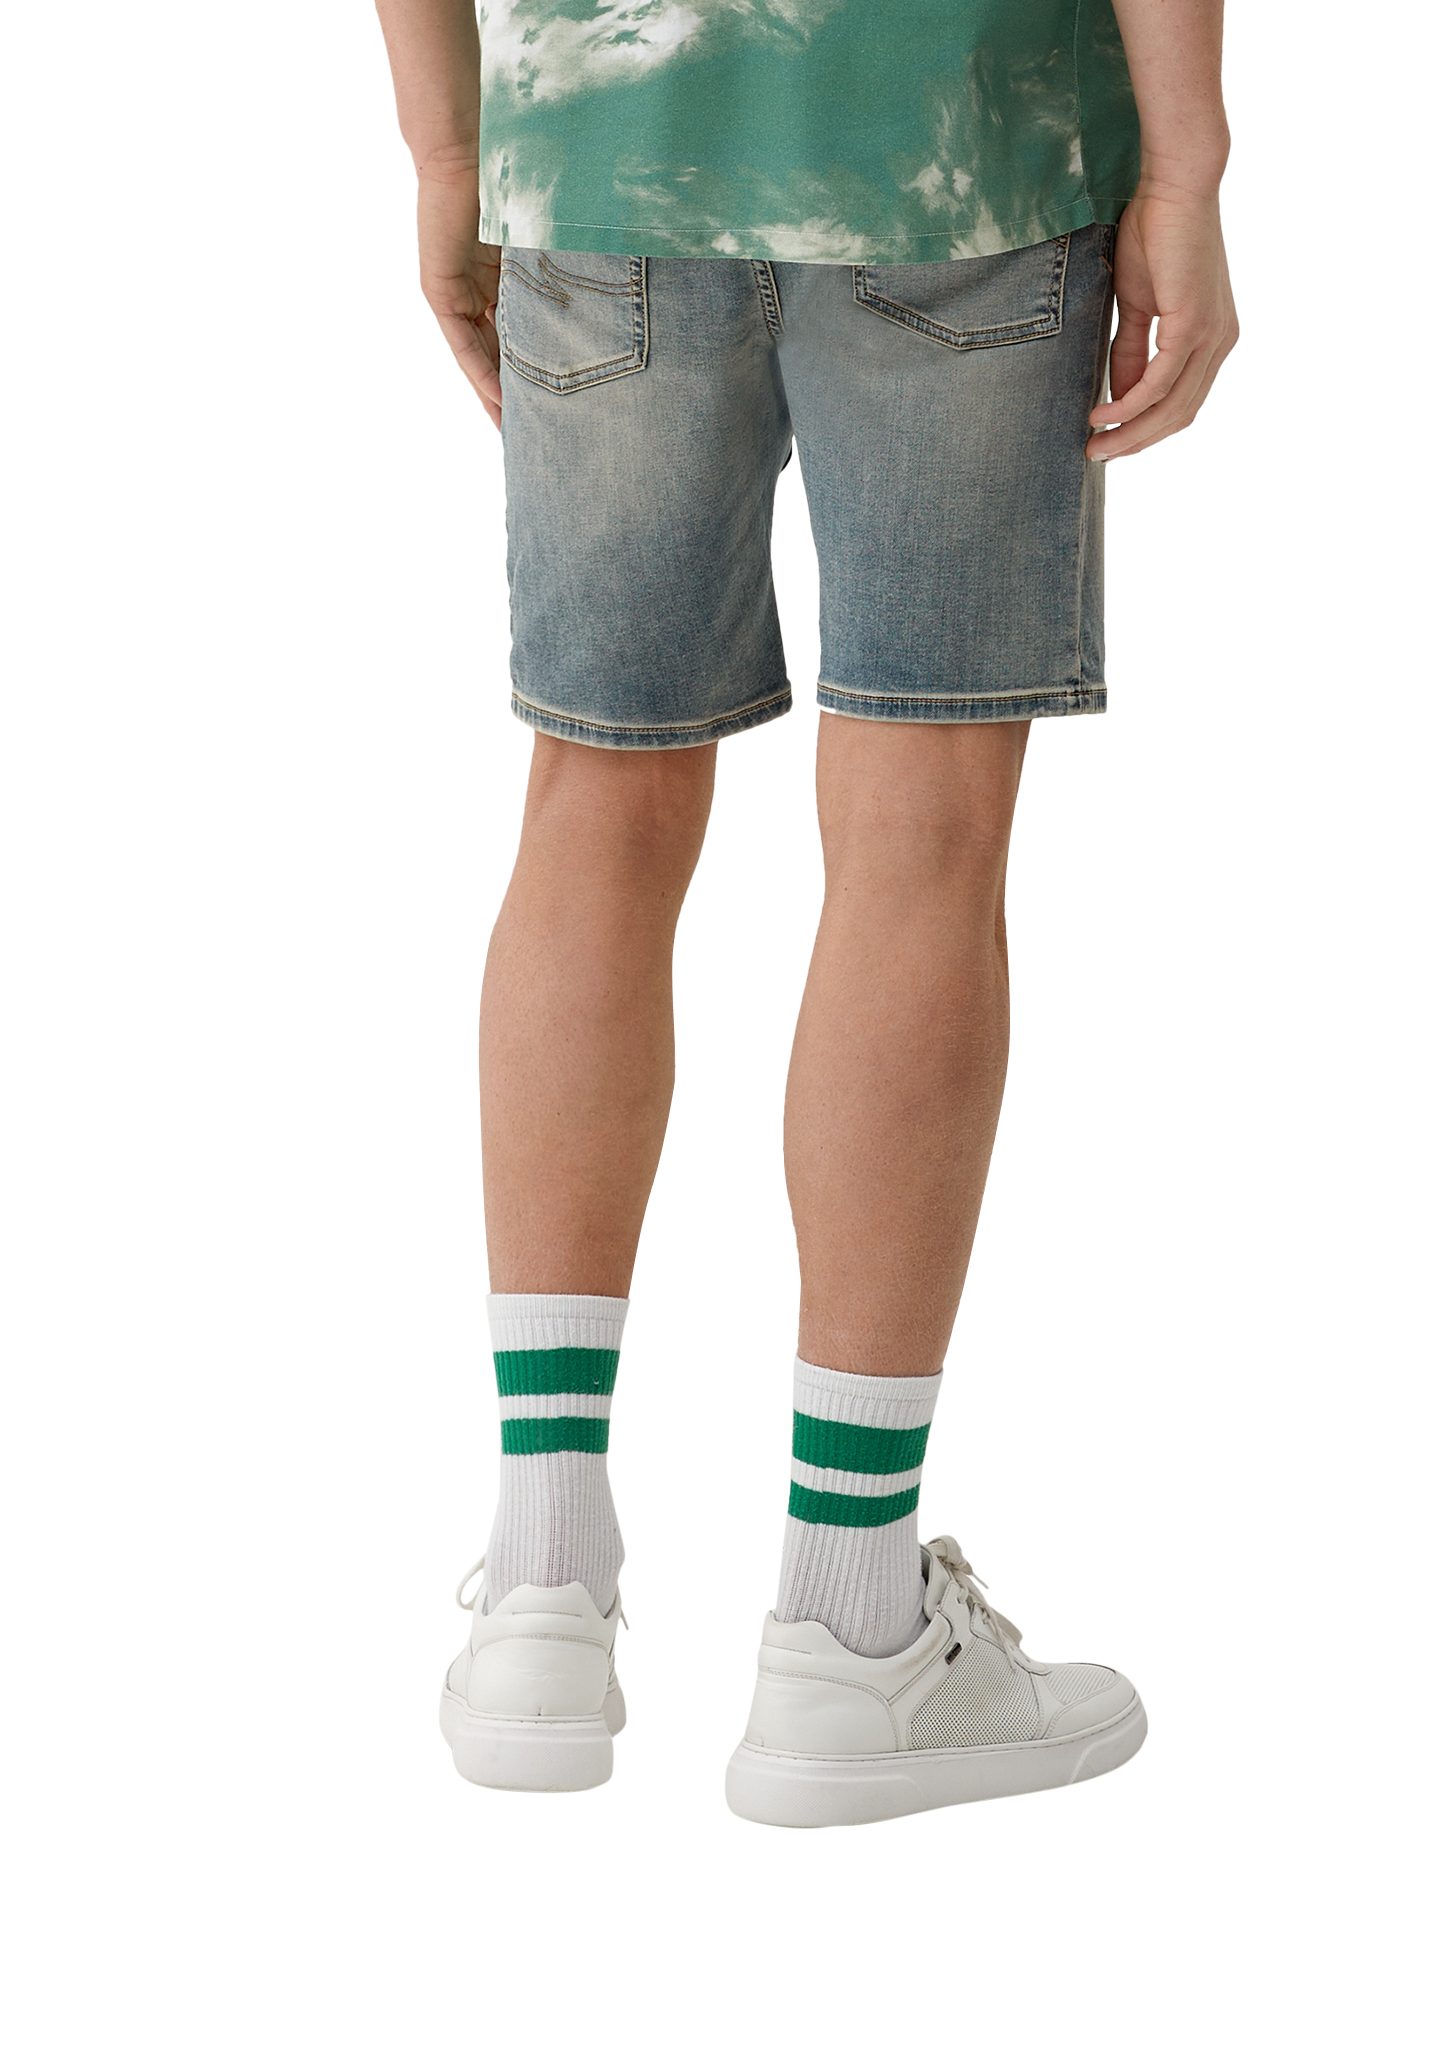 QS Jeansshorts Waschung hellblau Mid Regular Leg / Jeans-Shorts / Rise John Straight Fit 